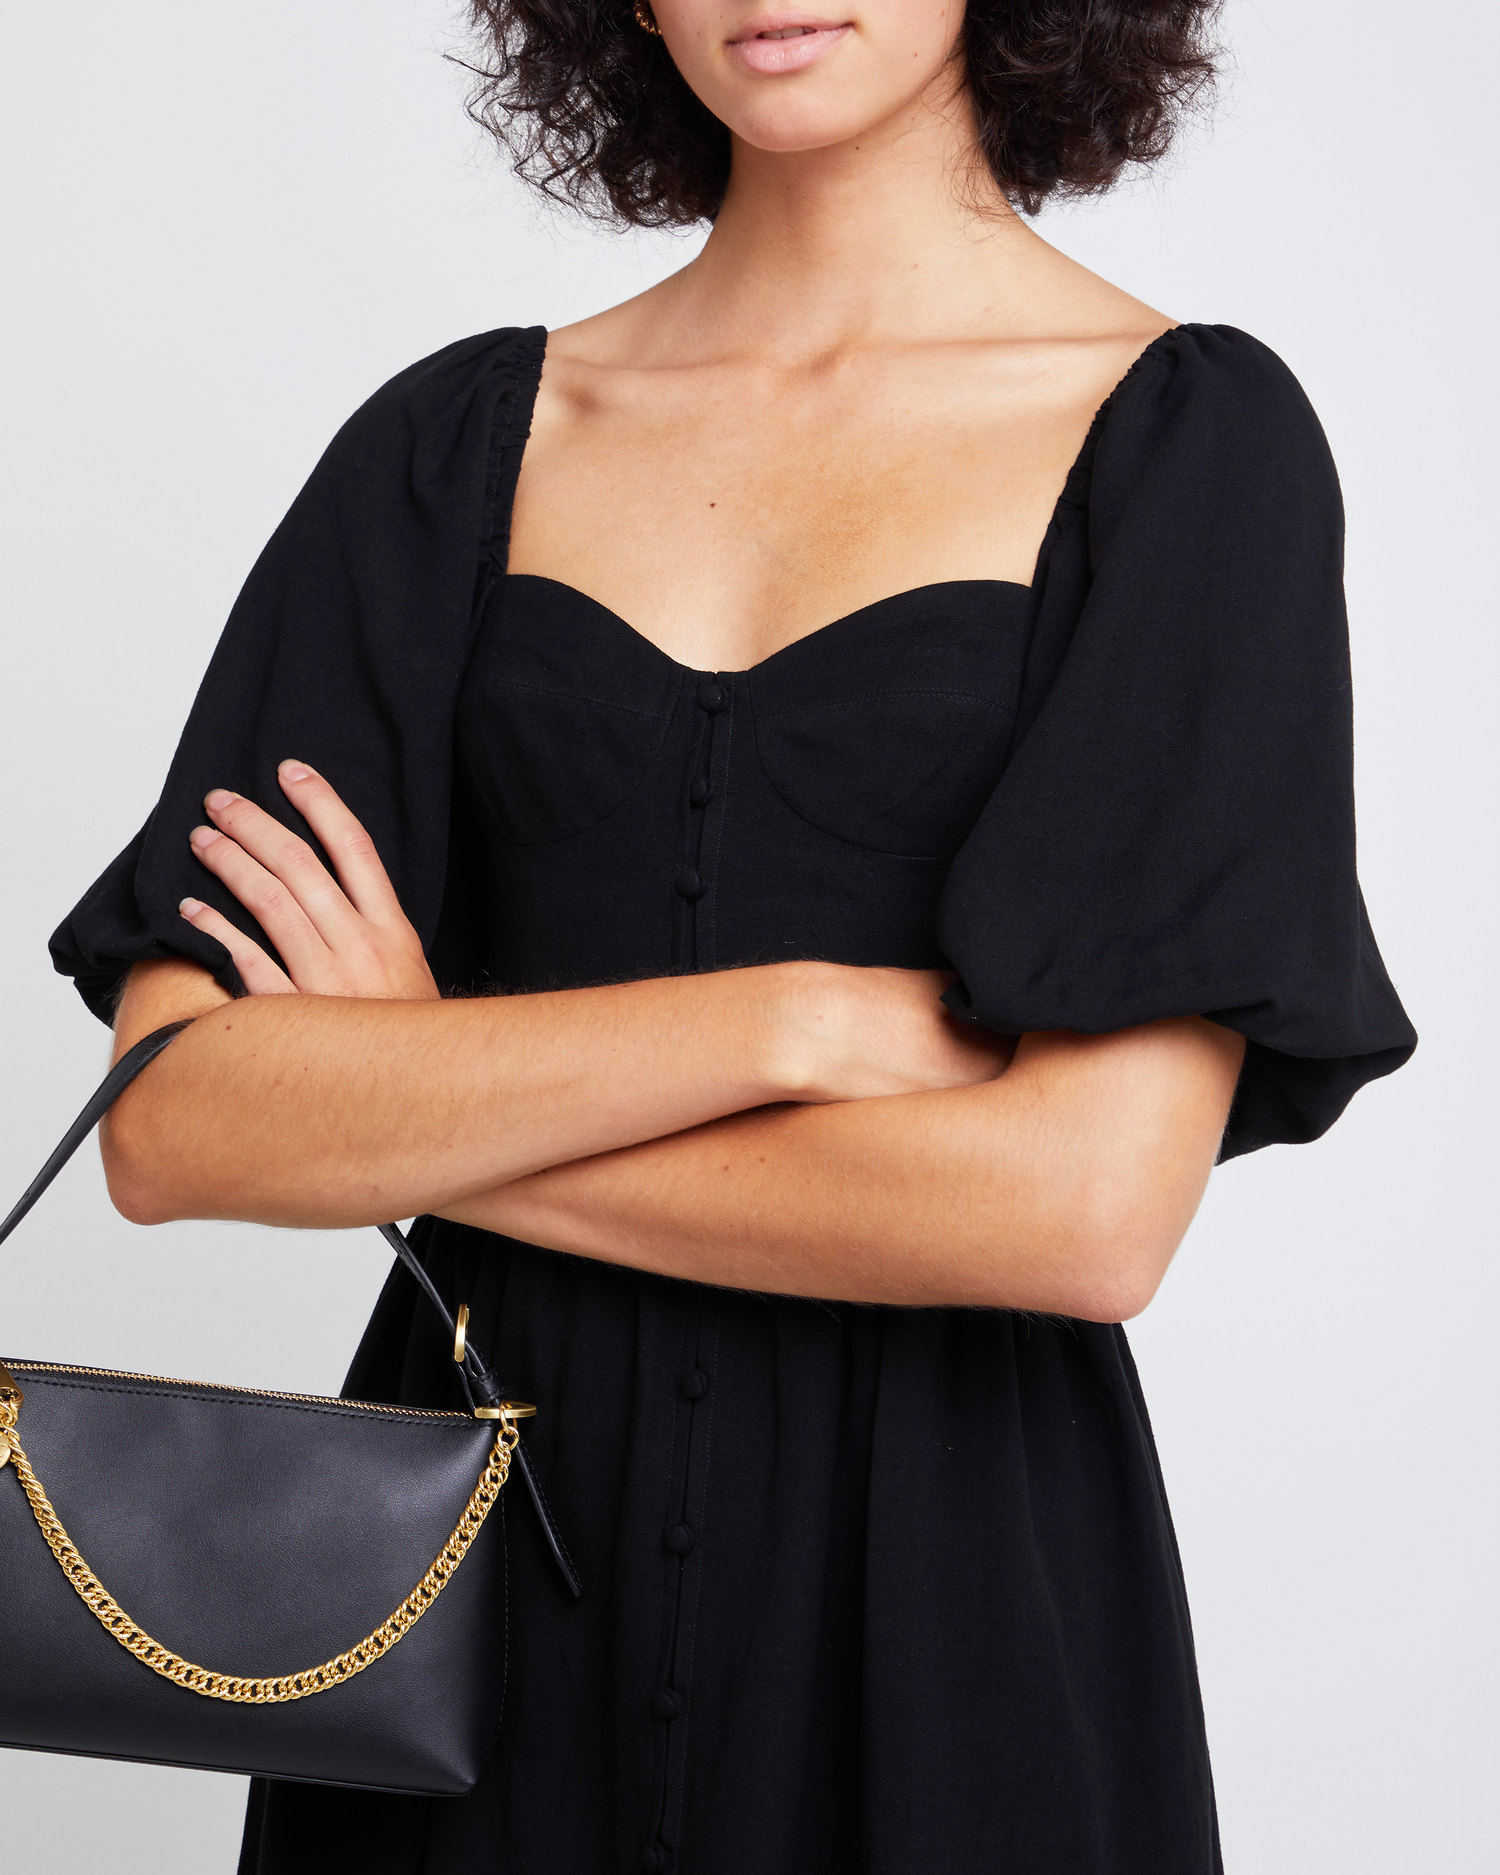 Sixth image of Esperanza Mini Dress, a black mini dress, sweetheart neckline, midi sleeves, 3/4 sleeves, puff sleeves, A-line